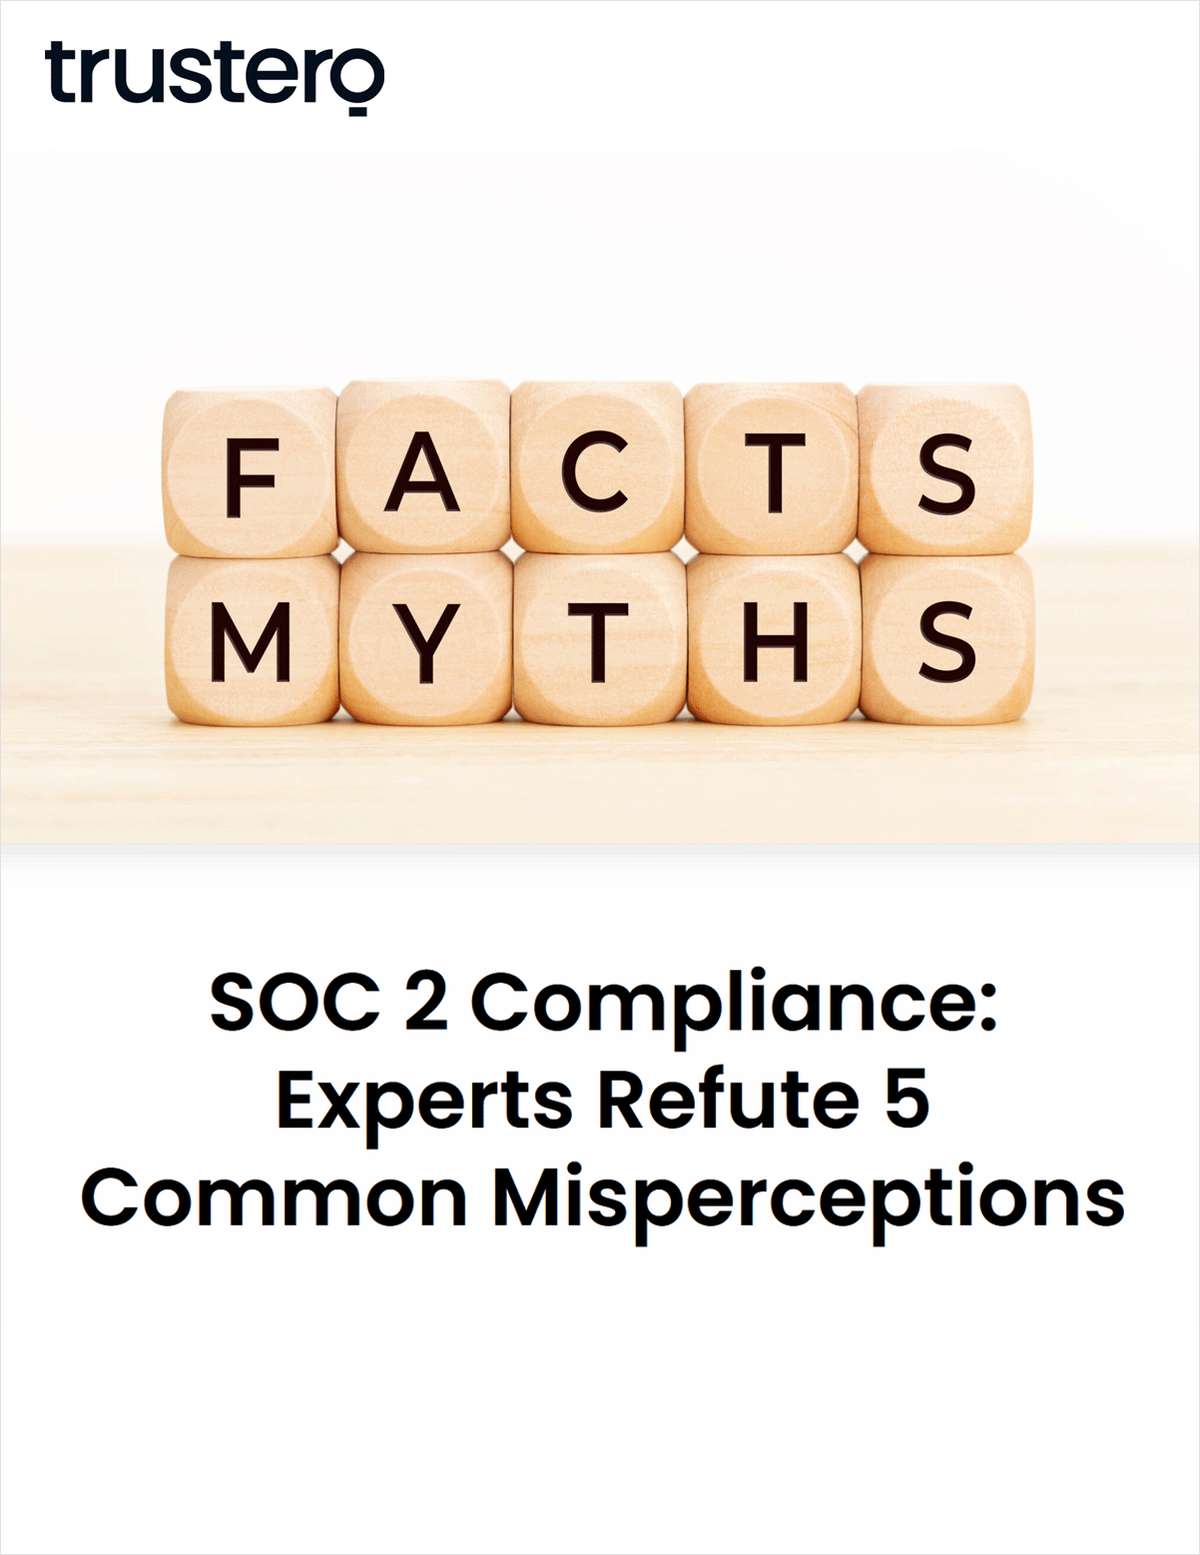 SOC 2 Compliance: Experts Refute 5 Common Misperceptions